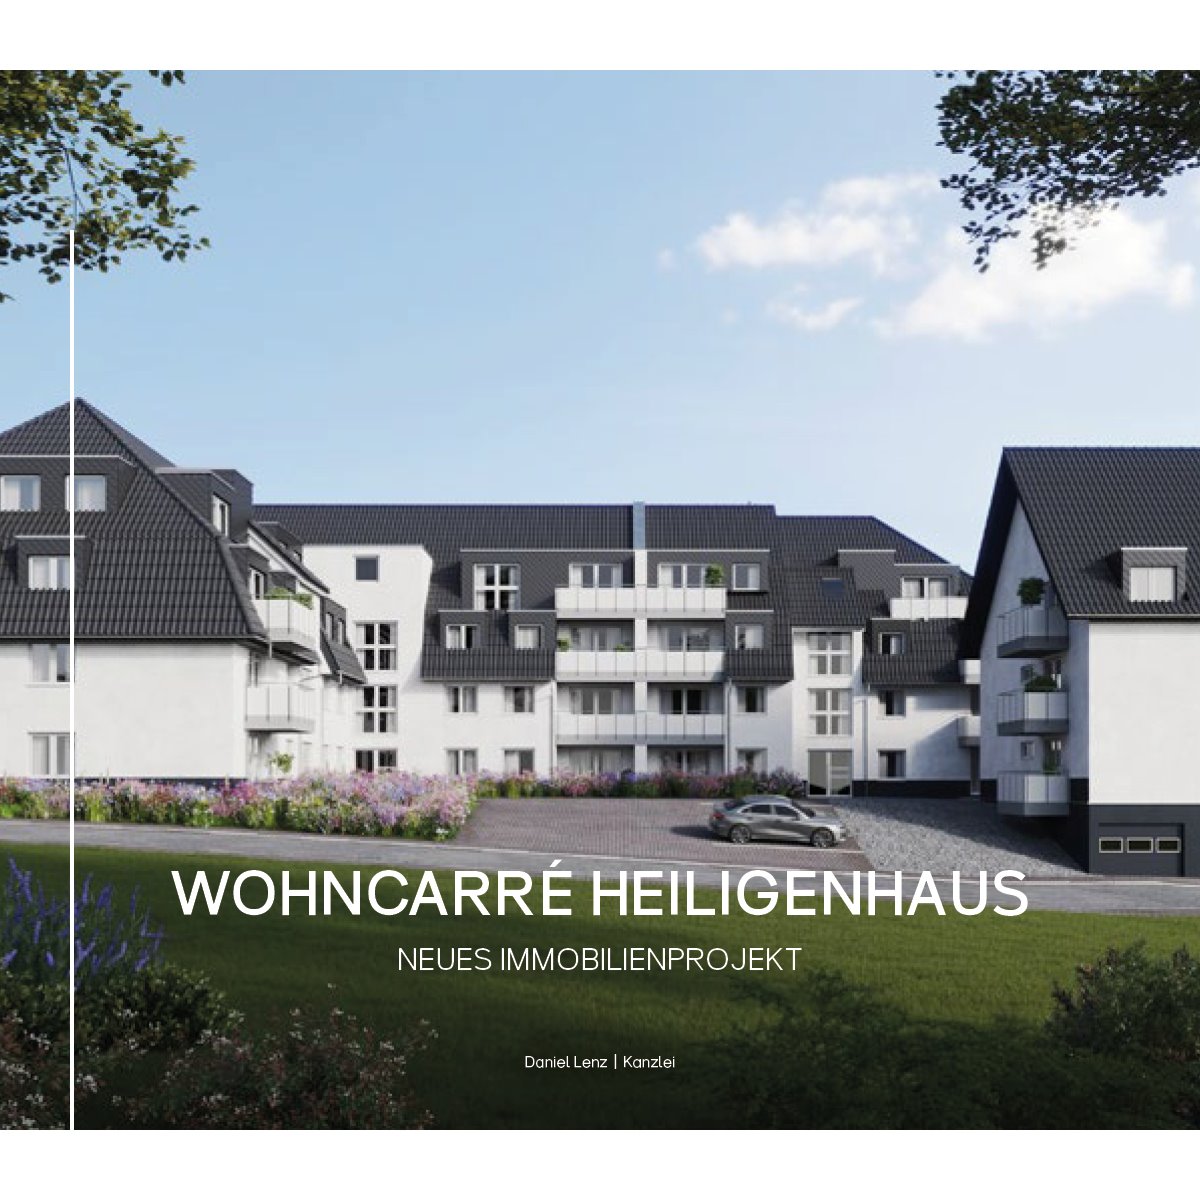 Neues Immobilienprojekt - Wohncarré Heiligenhaus